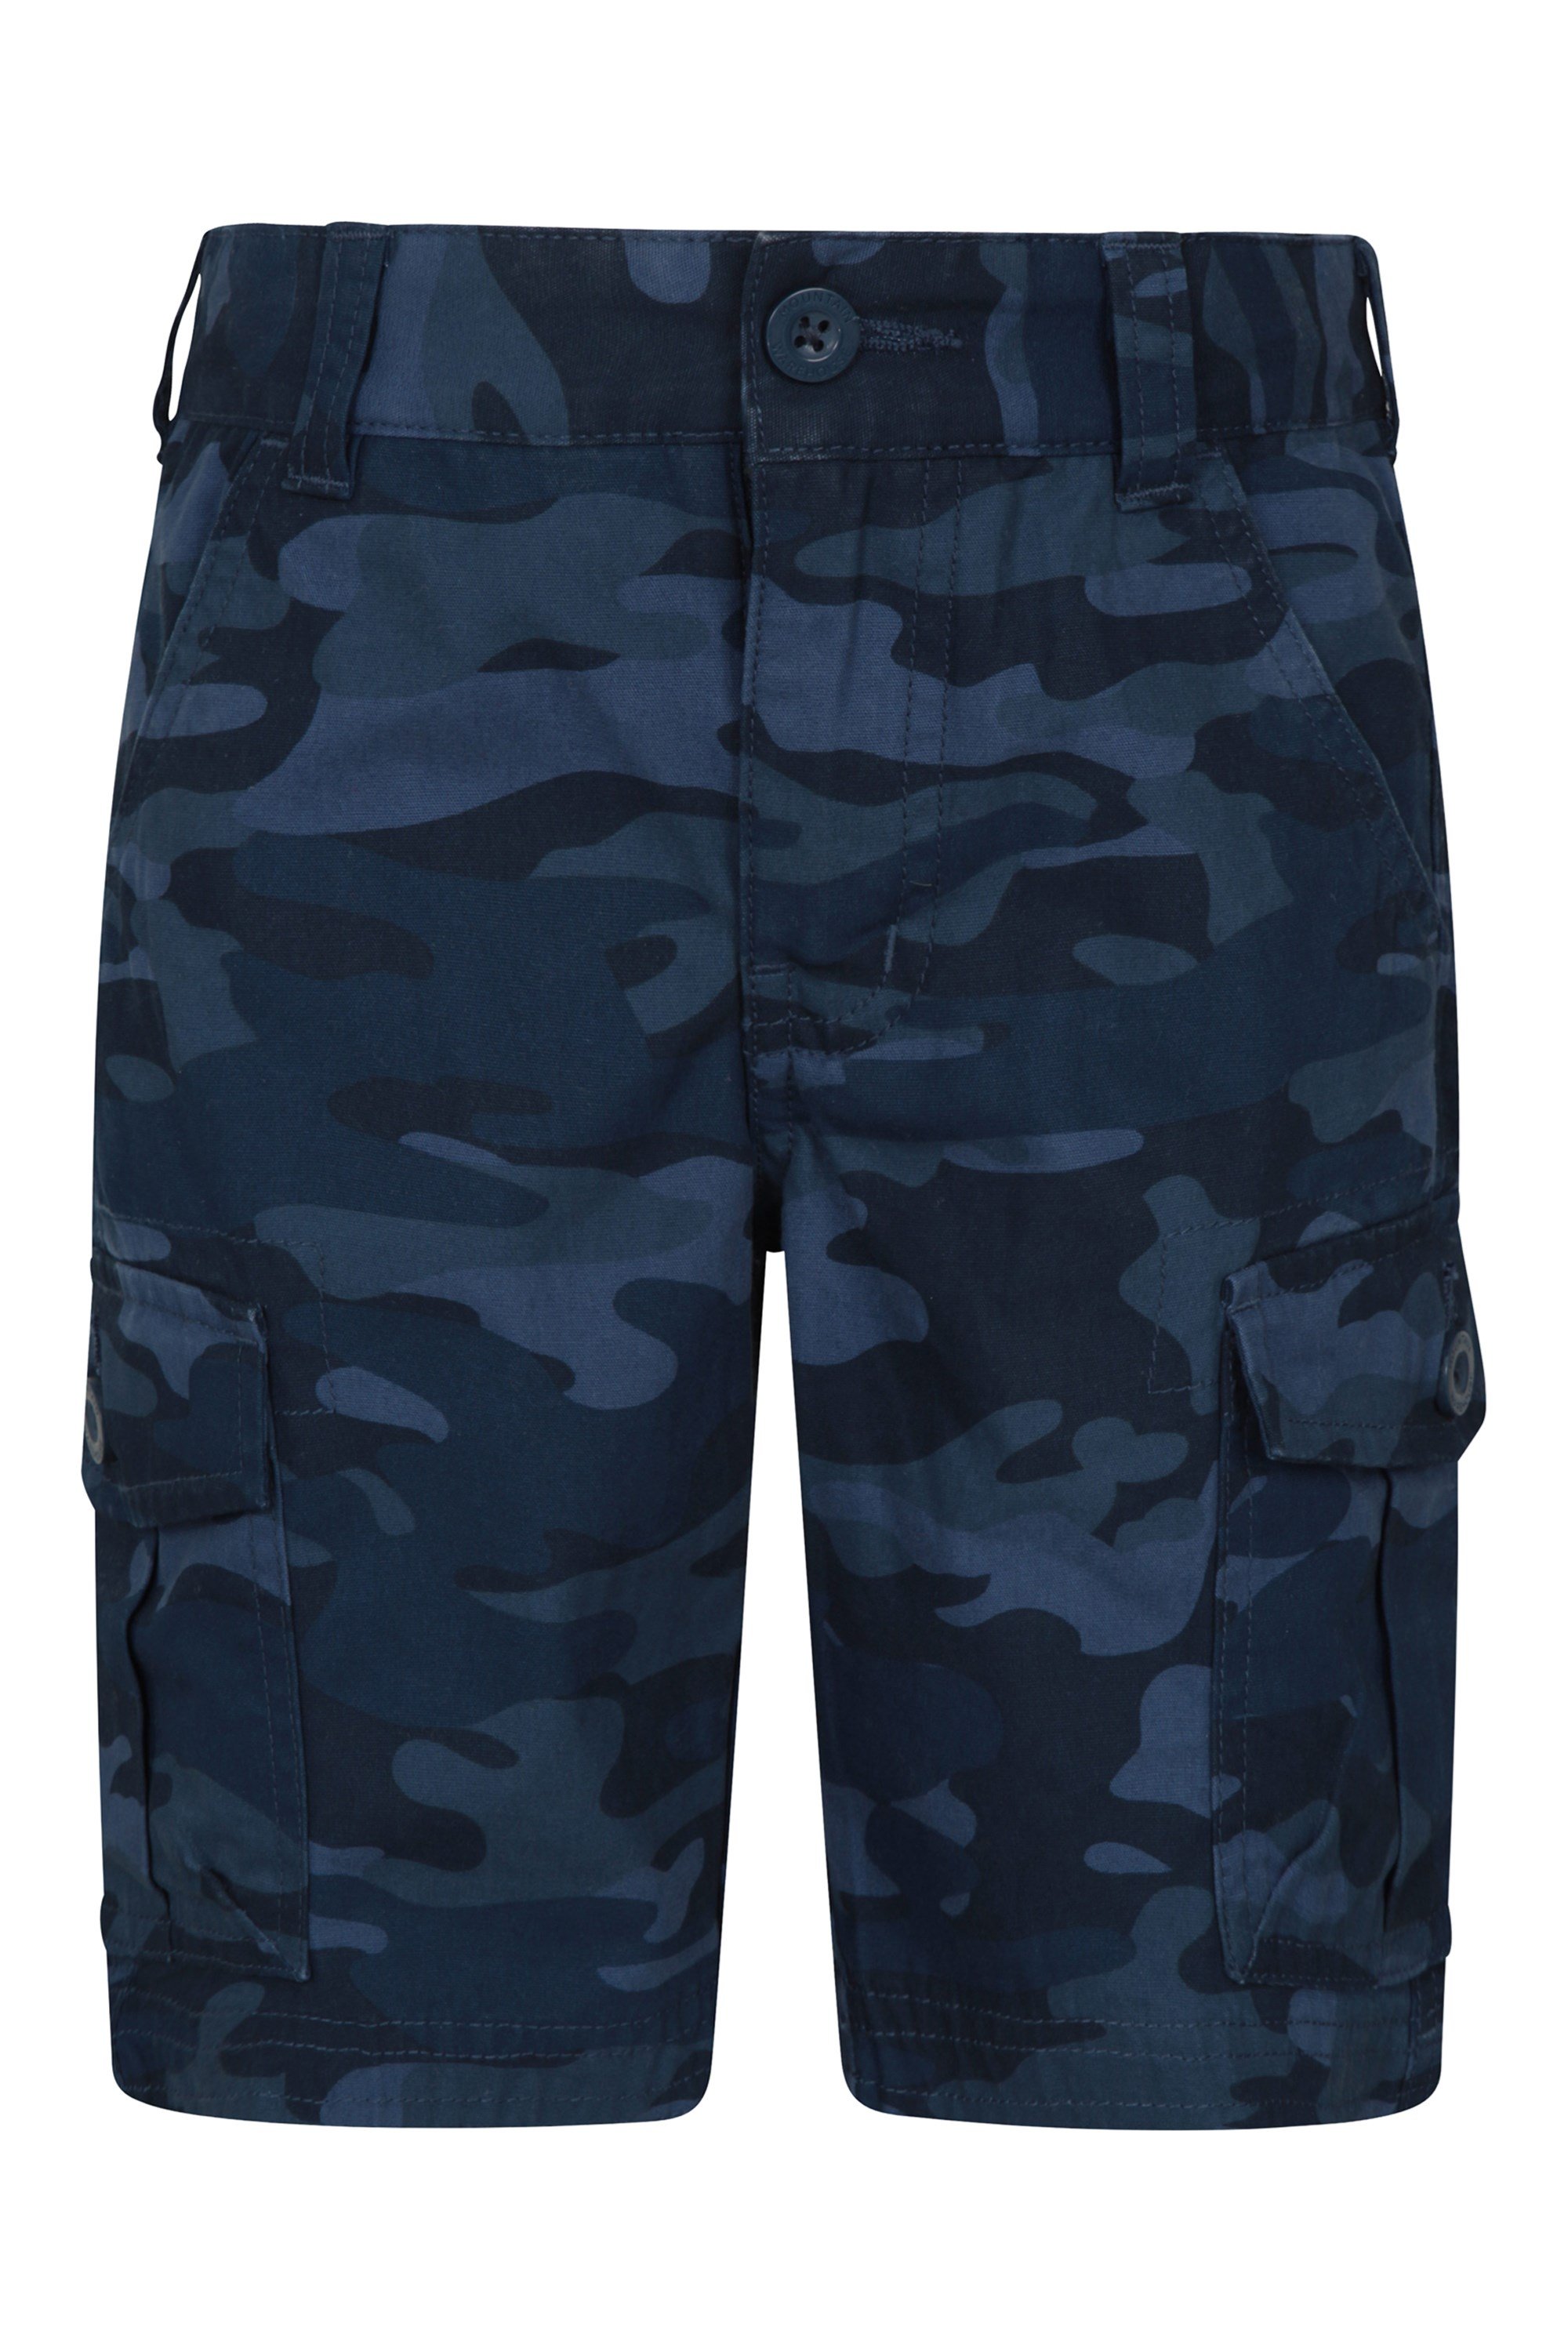 Short Cargo Enfants Camouflage - Bleu Marine